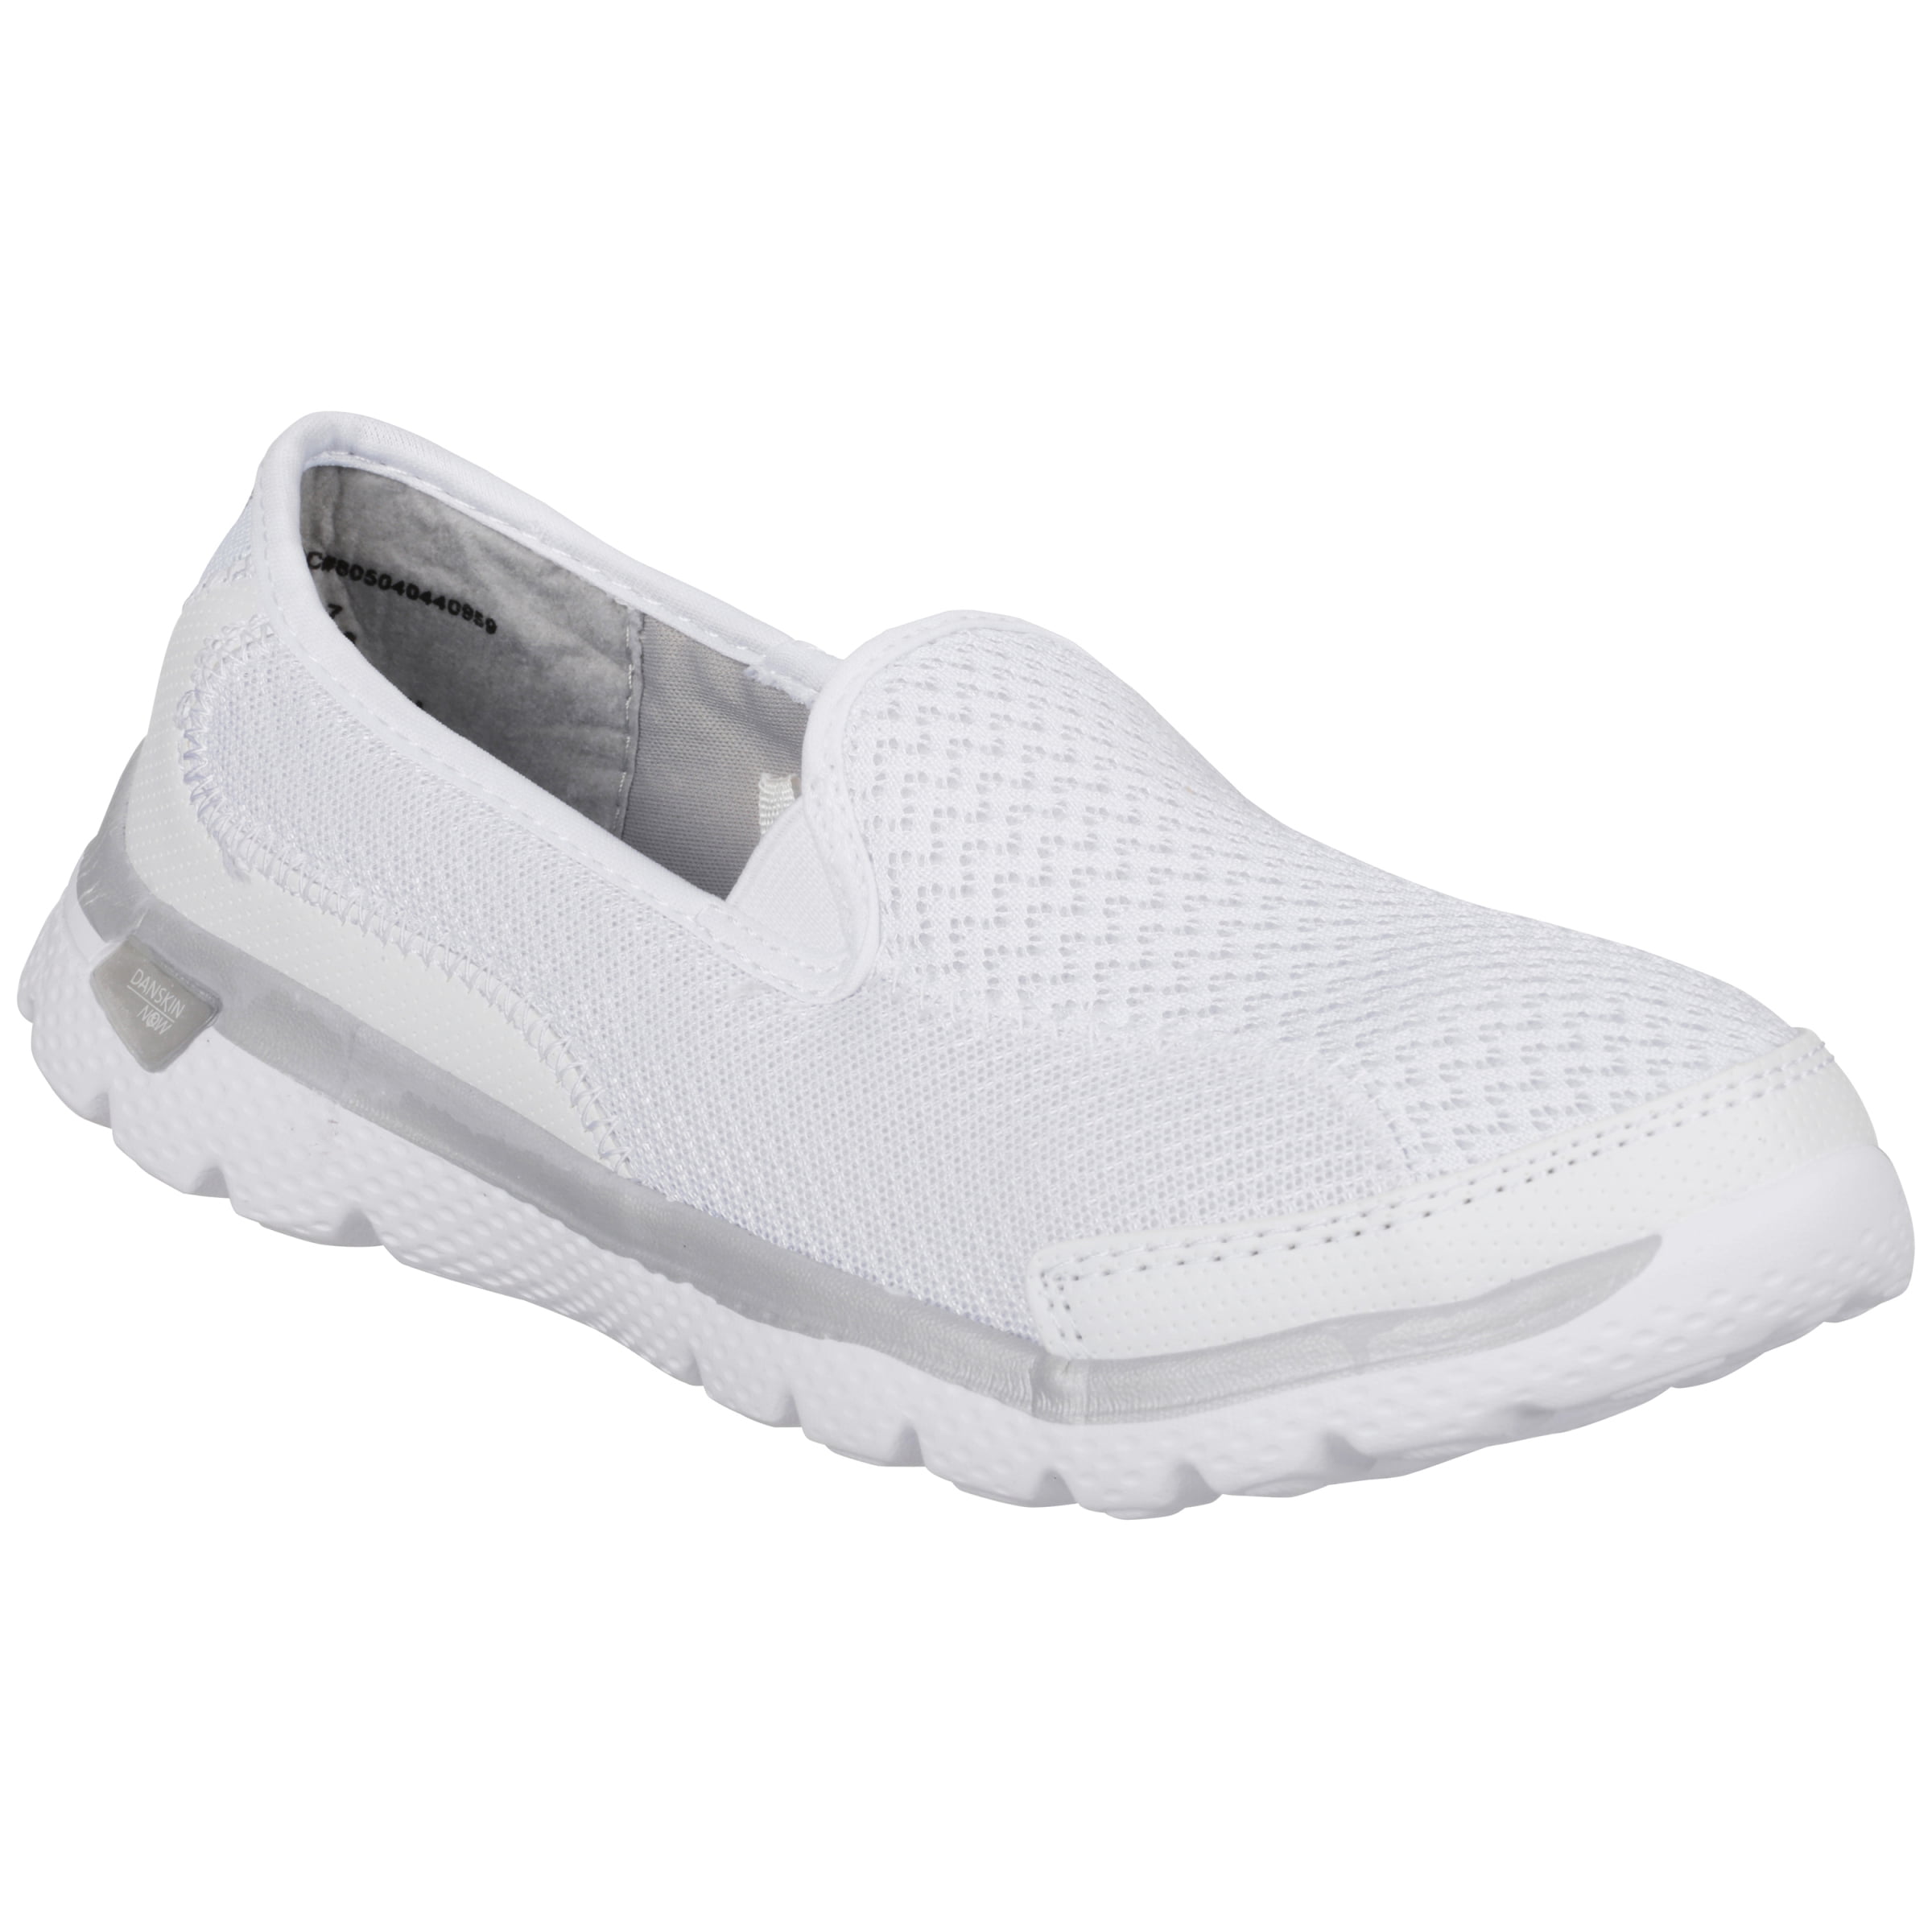 Danskin Now® Memory Foam White Size 8½ Women's Athletic Shoes 1 pr Box ...